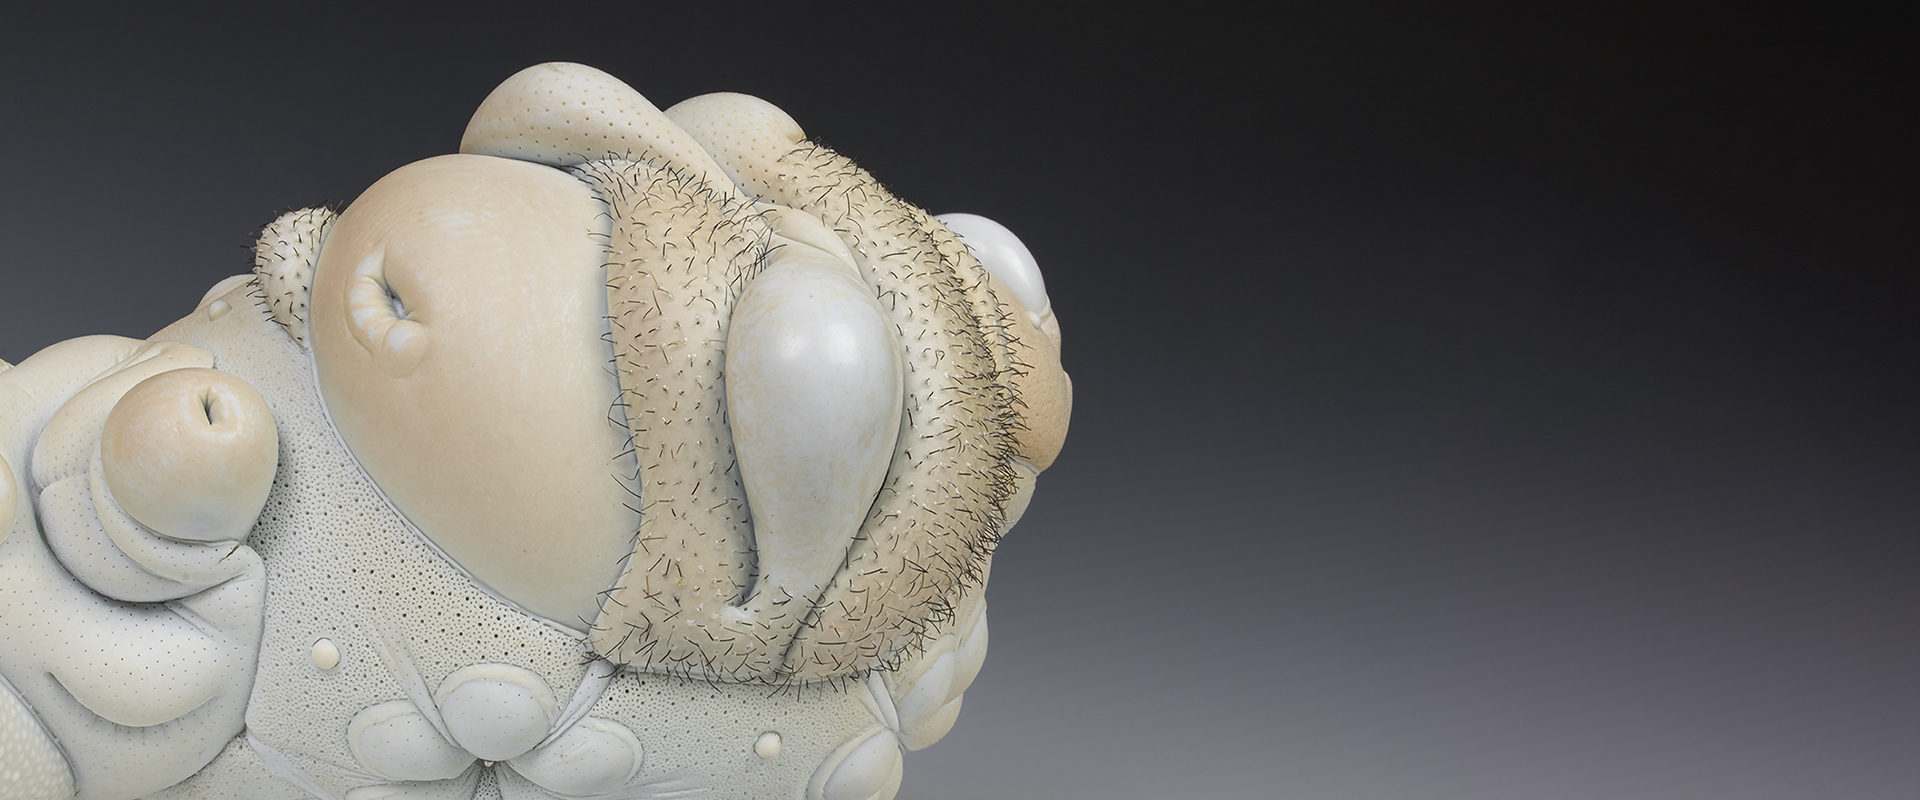 Jason Briggs "Olympia" (detail). porcelain, hair, and mixed media sculpture ceramics.